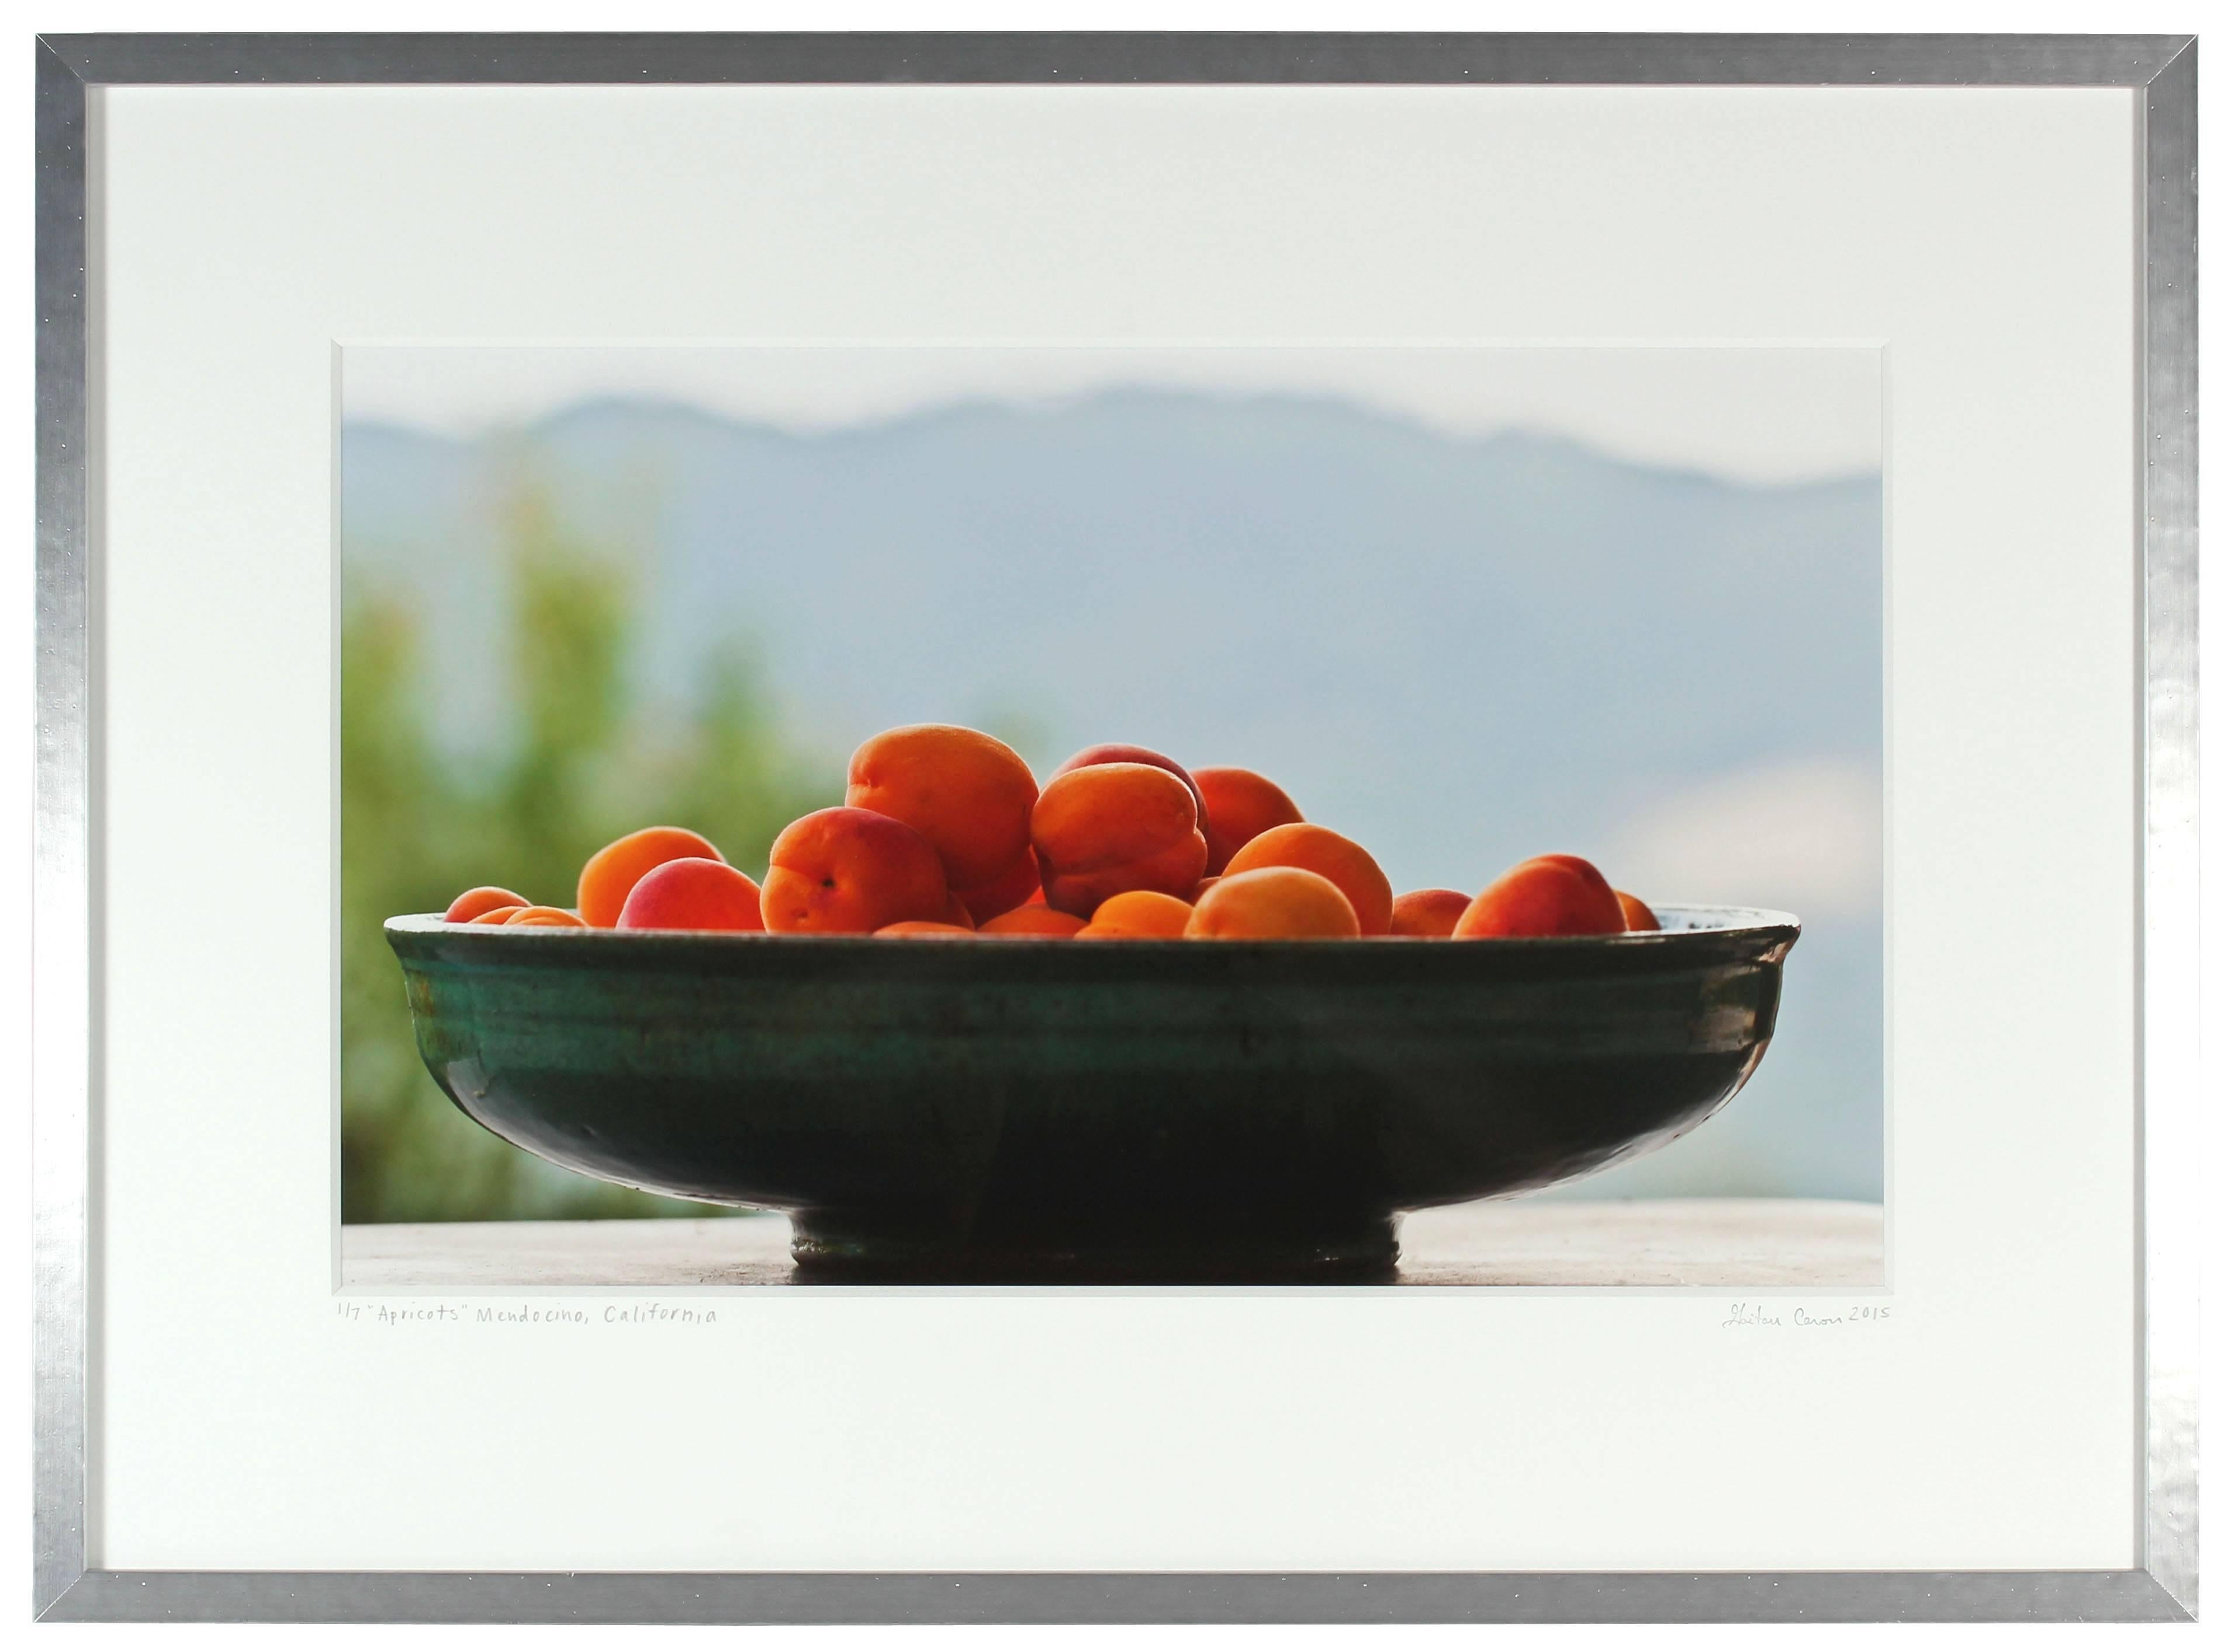 "Apricots" Contemporary Color Still-life Photograph, Mendocino, CA